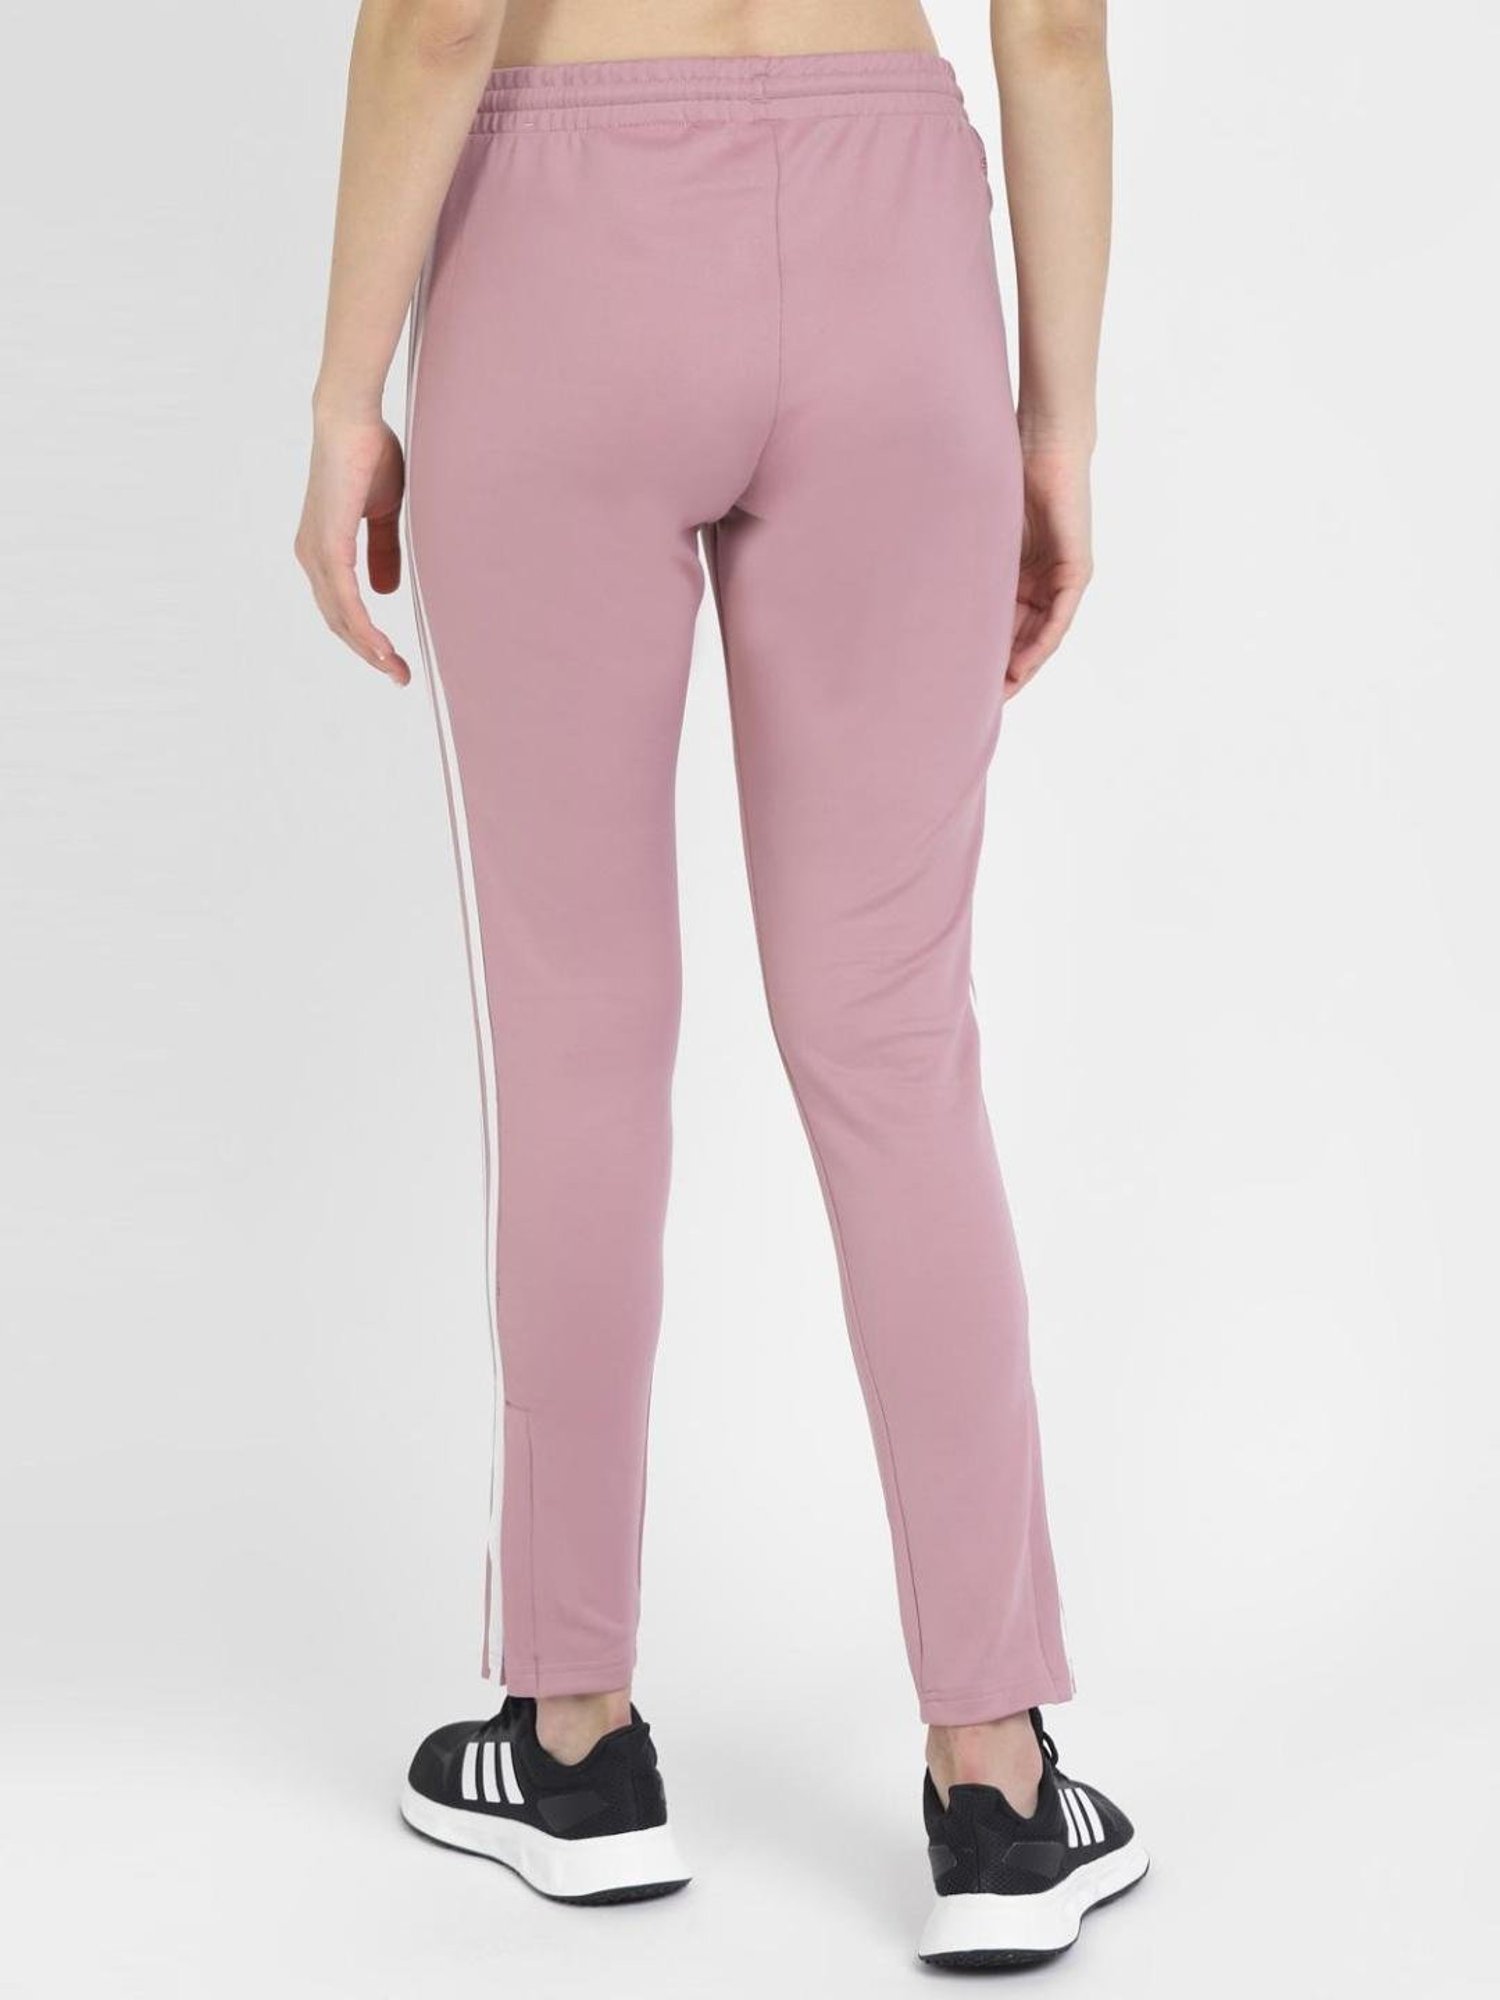 Buy Navy Blue Track Pants for Women by Adidas Originals Online  Ajiocom